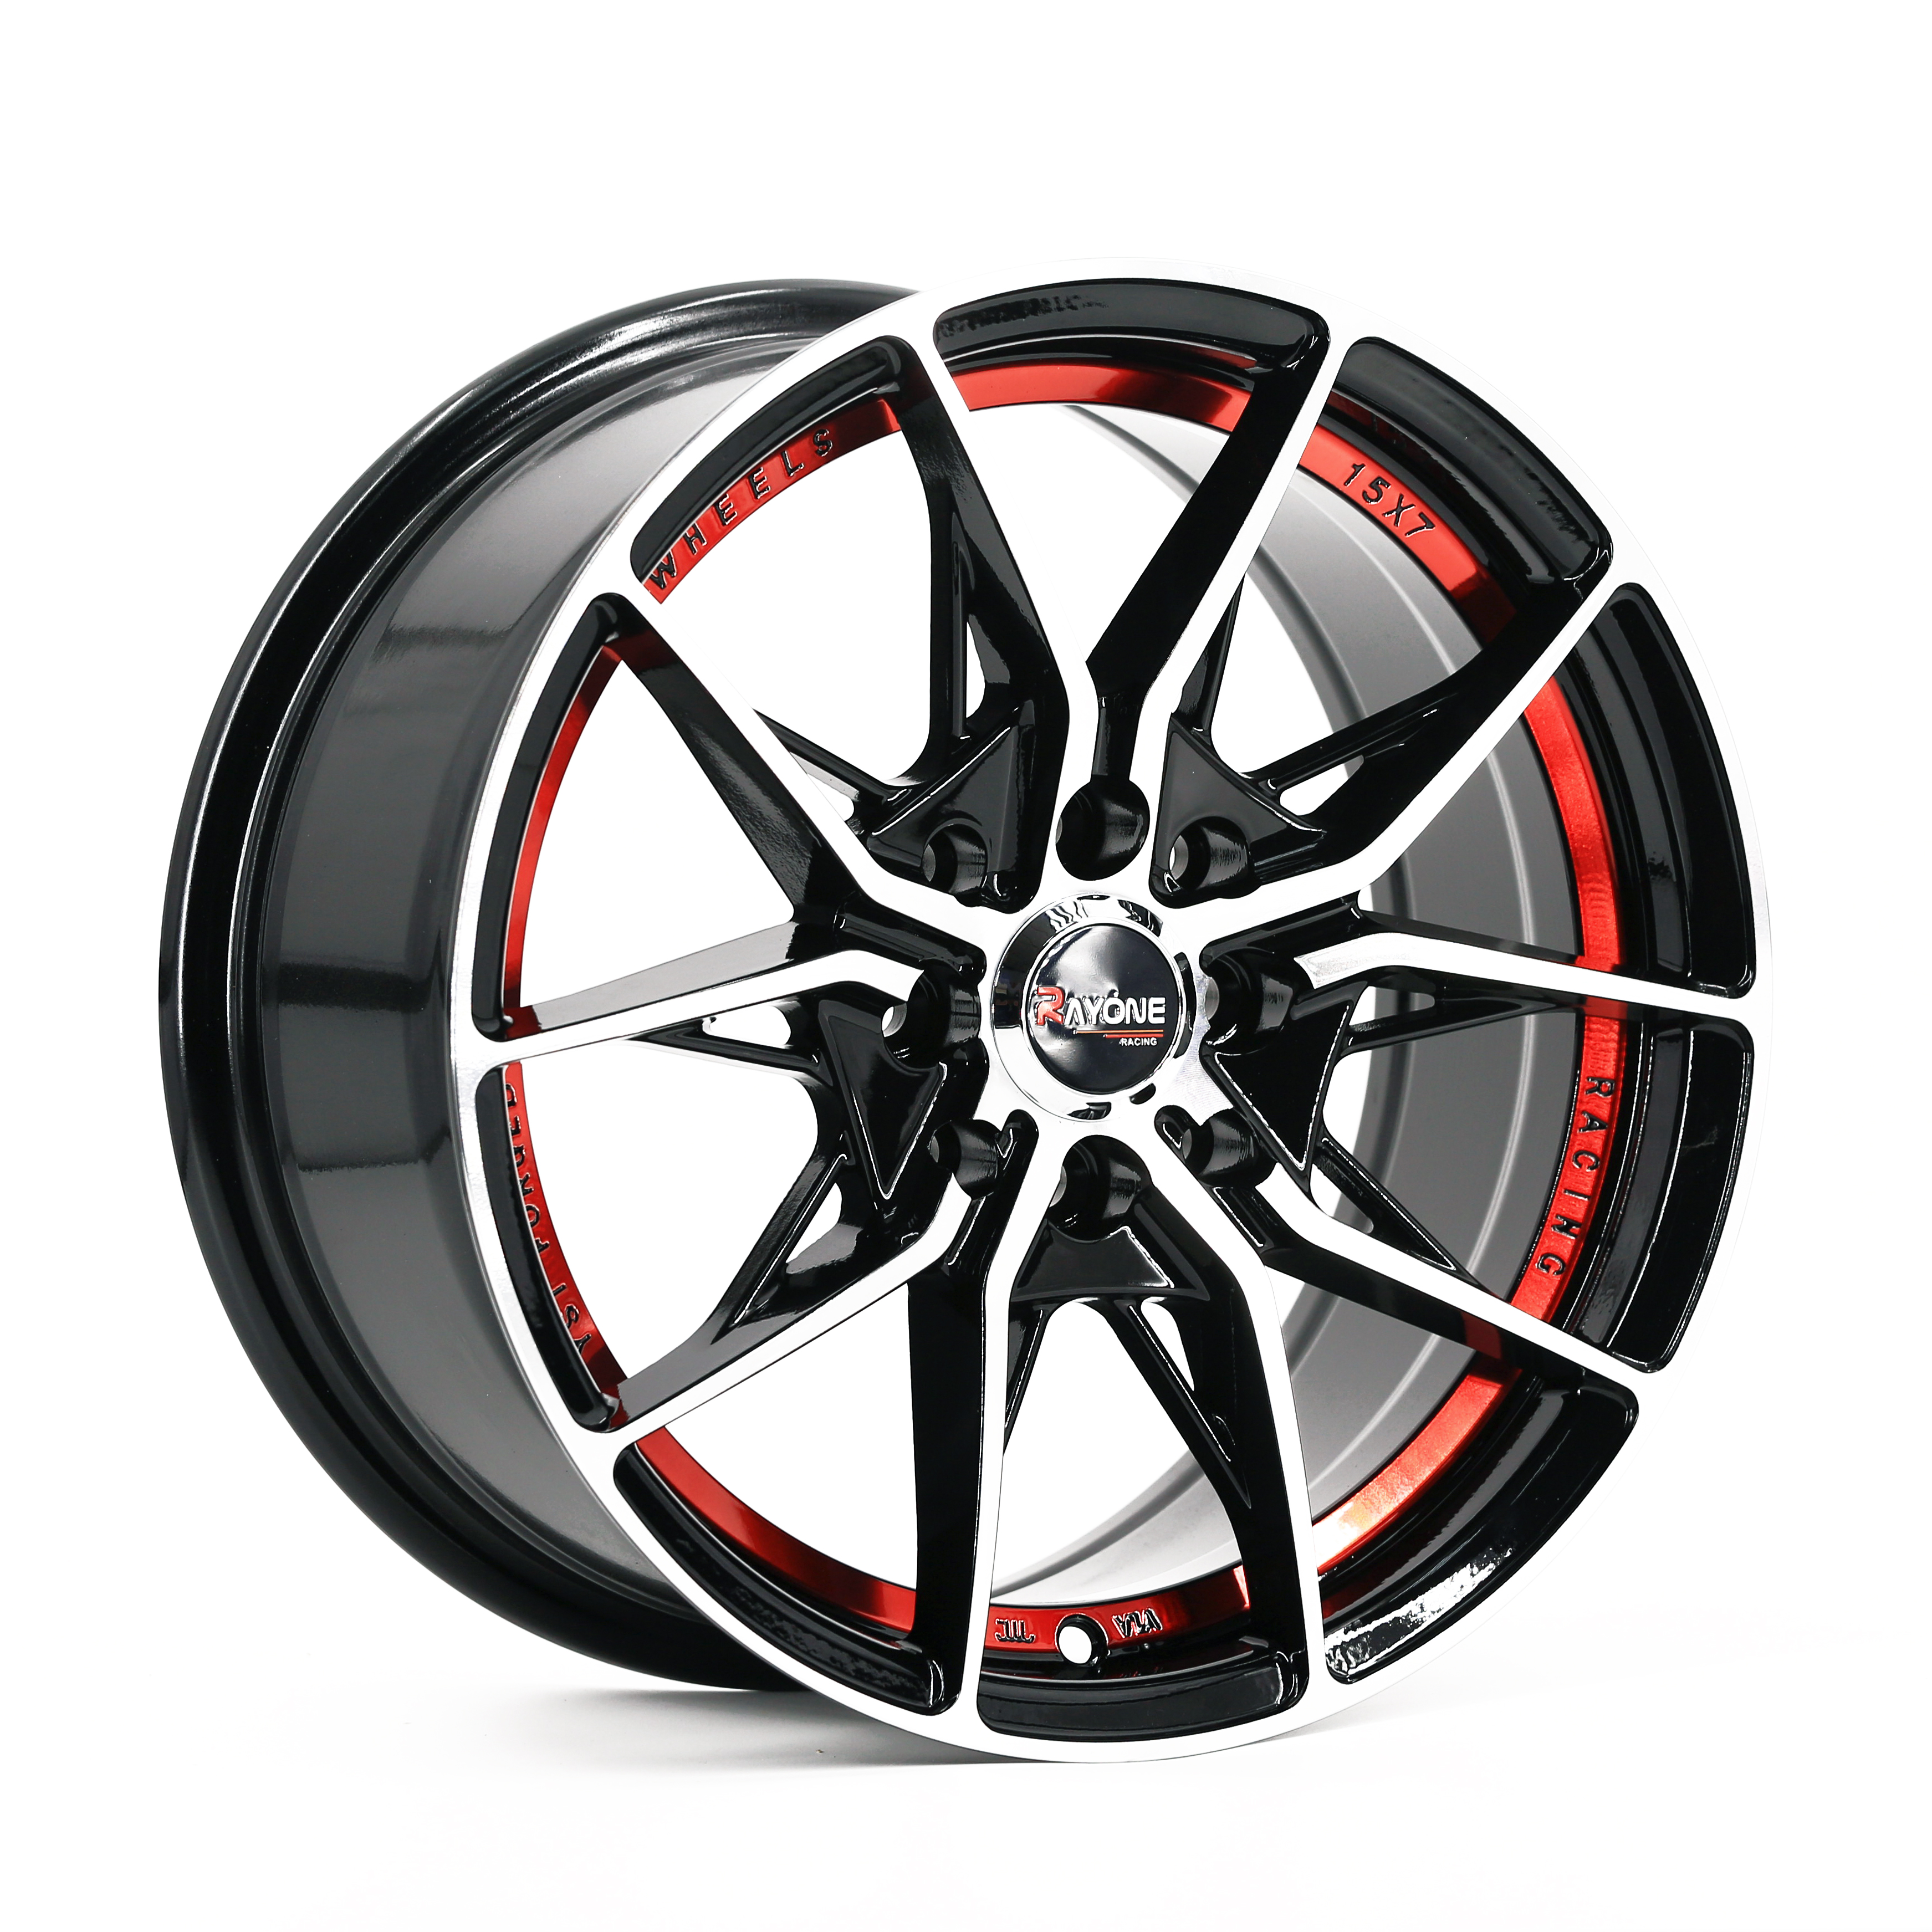 New Fashion Design for 18 Mag Wheels - Aftermarket Wheels 15 Inch 4X114.3 Alloy Aluminum Car Wheel – Rayone